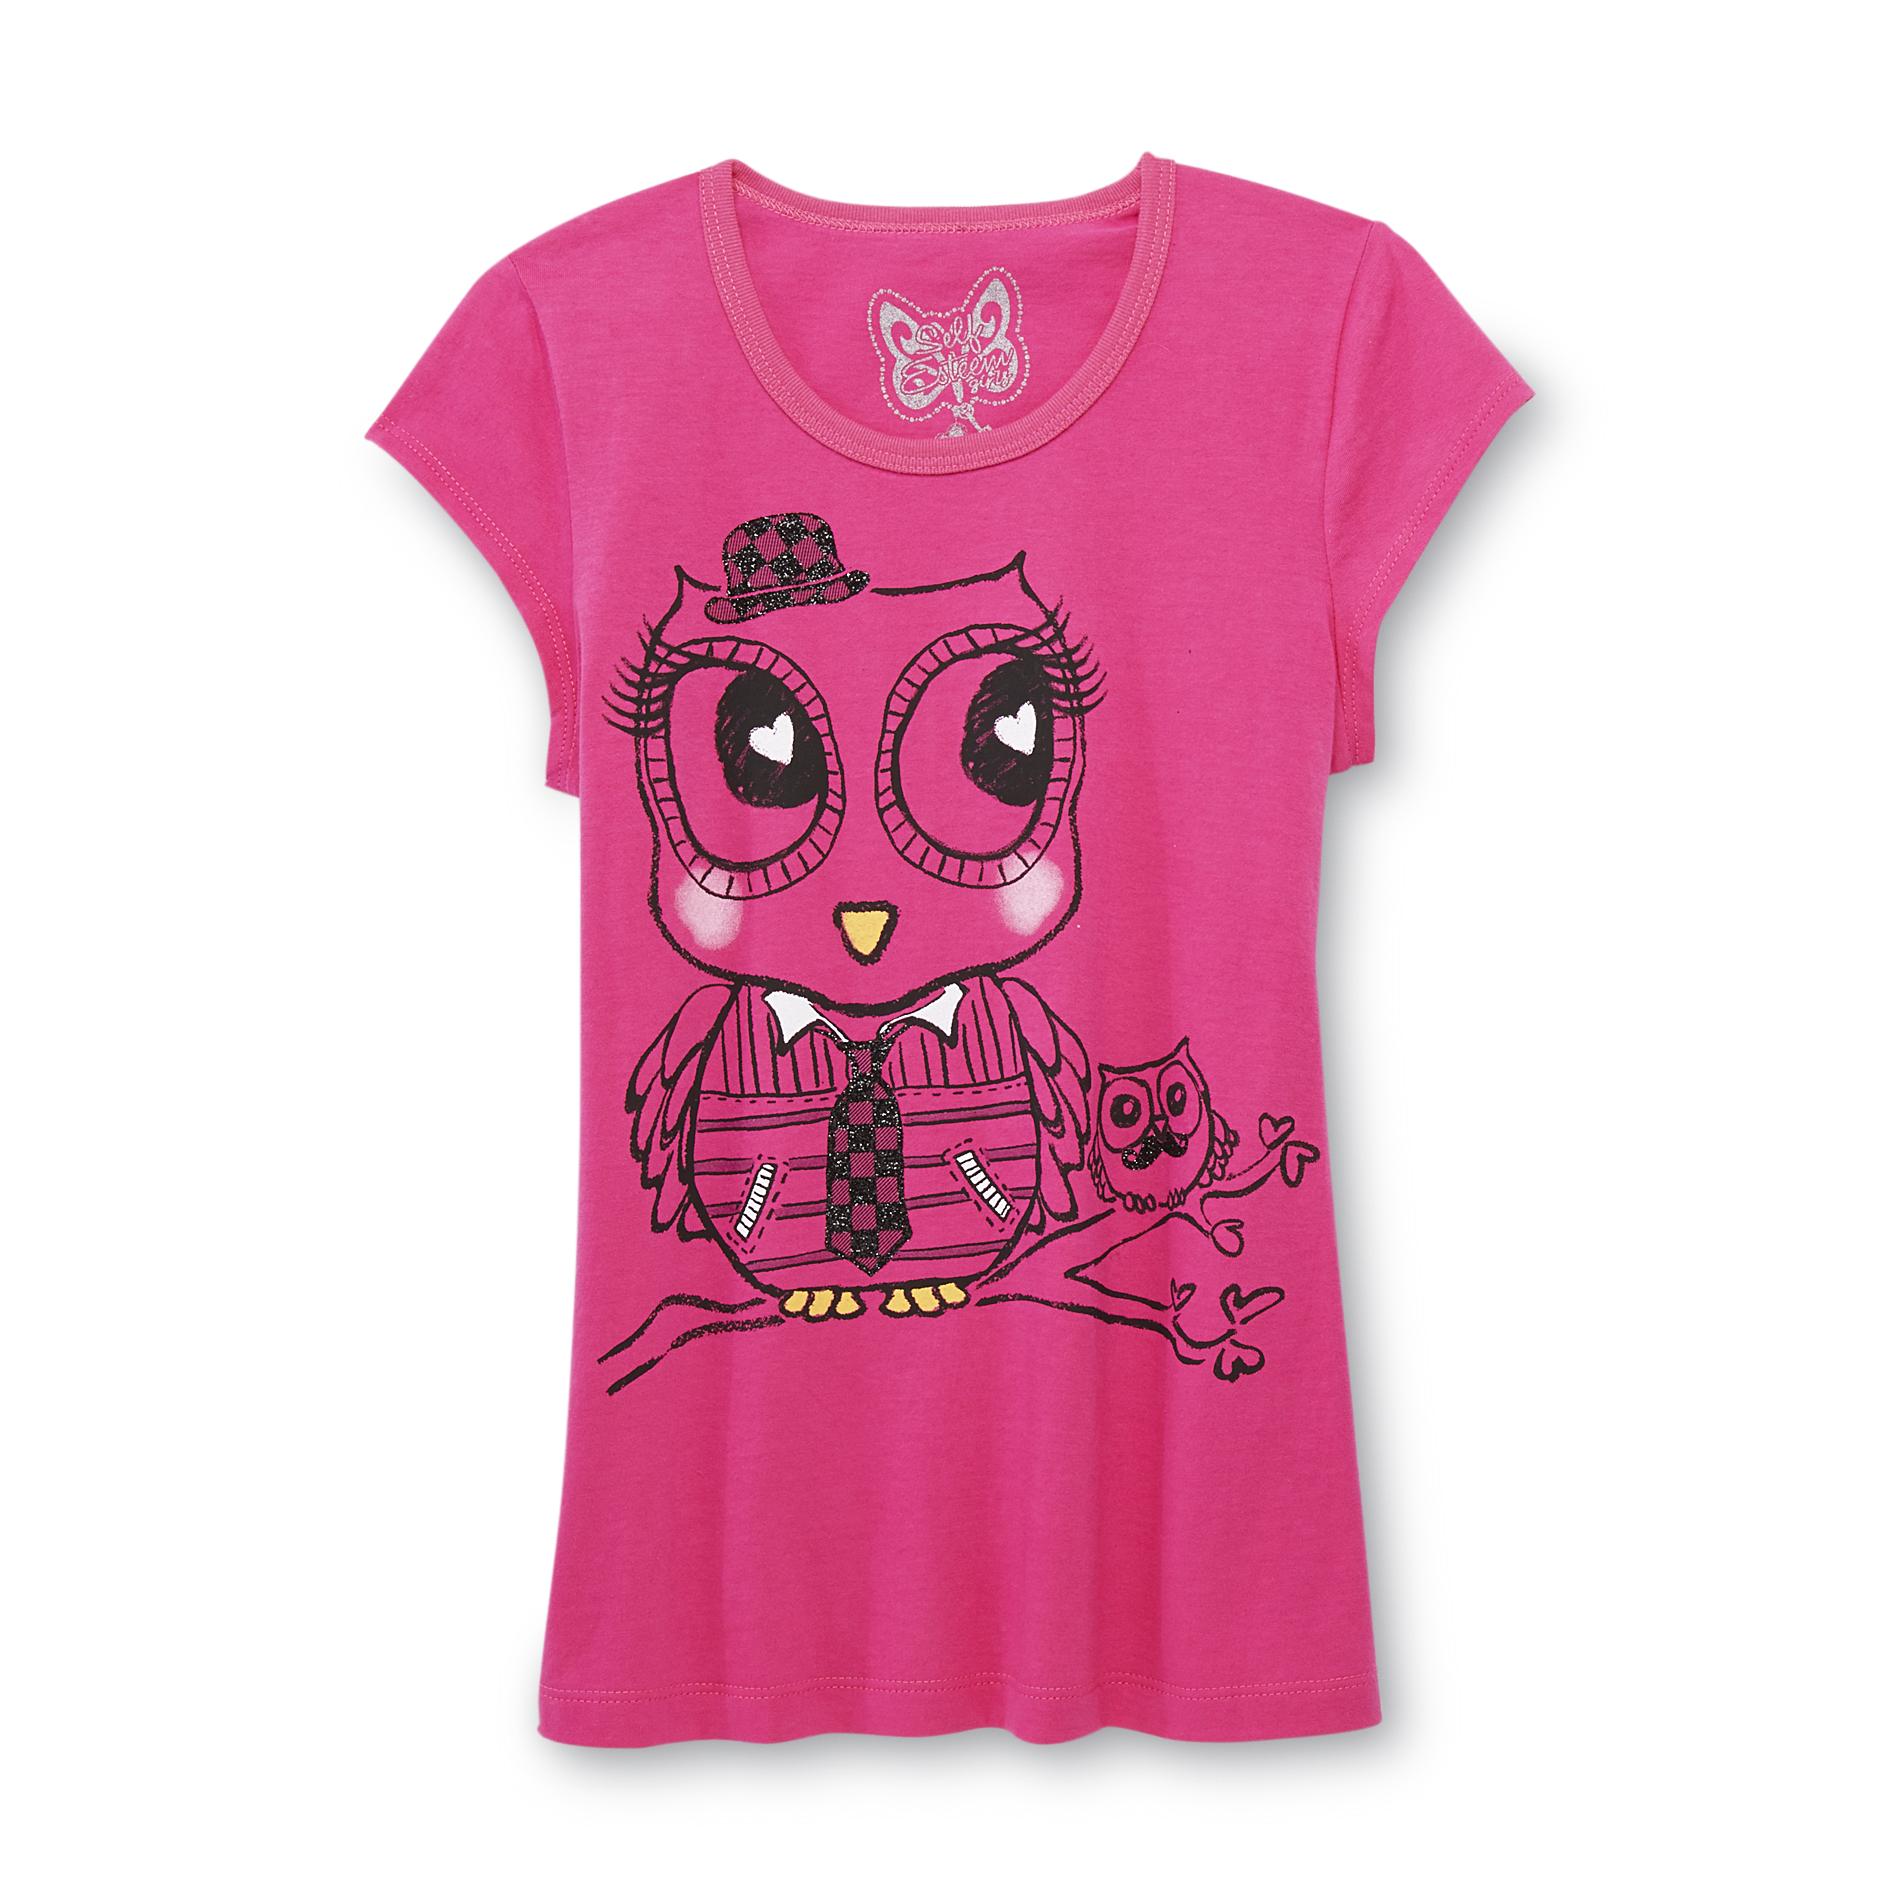 Self Esteem Girl's Graphic T-Shirt - Owls